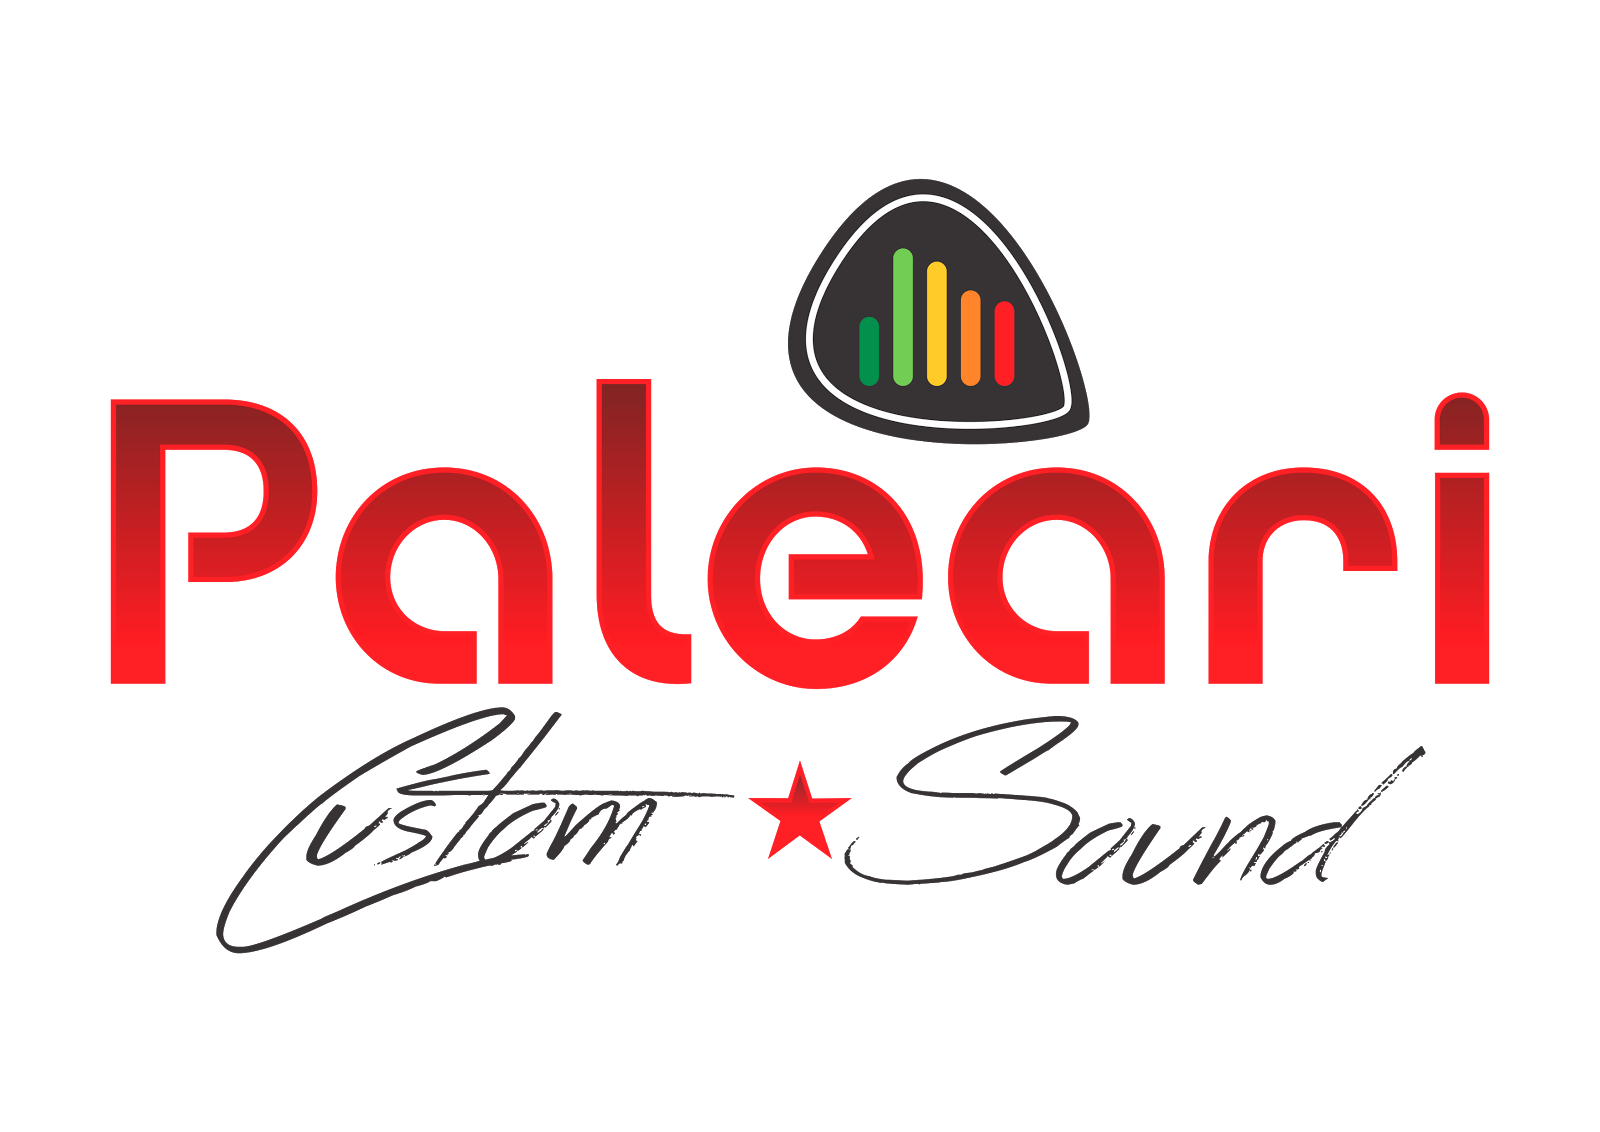 Paleari Custom Sound